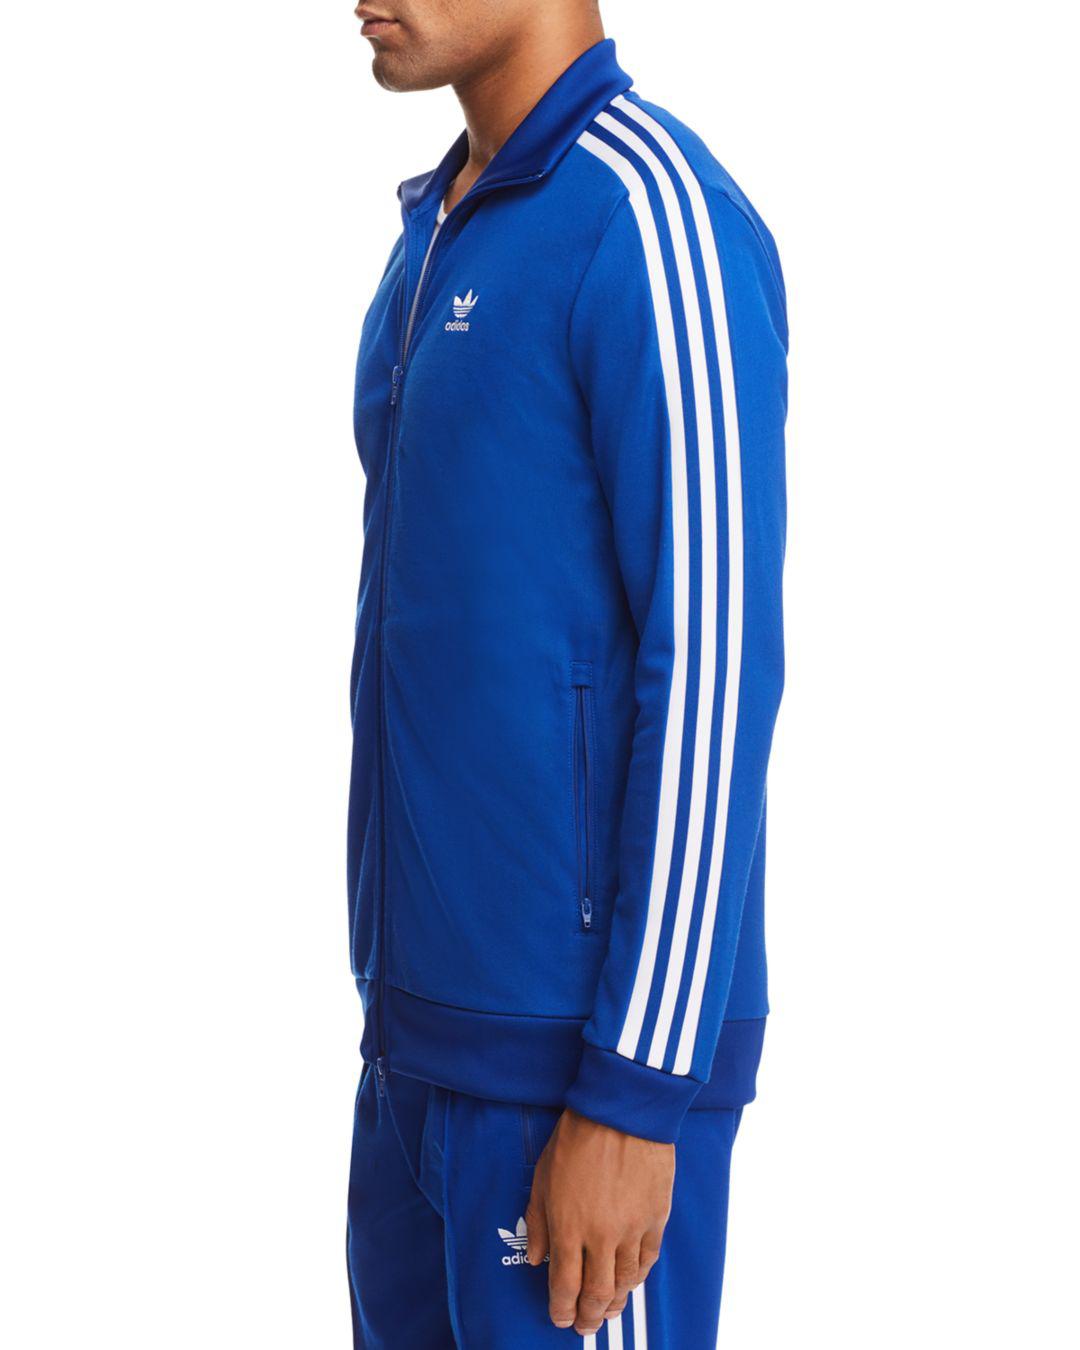 royal blue adidas sweat suit